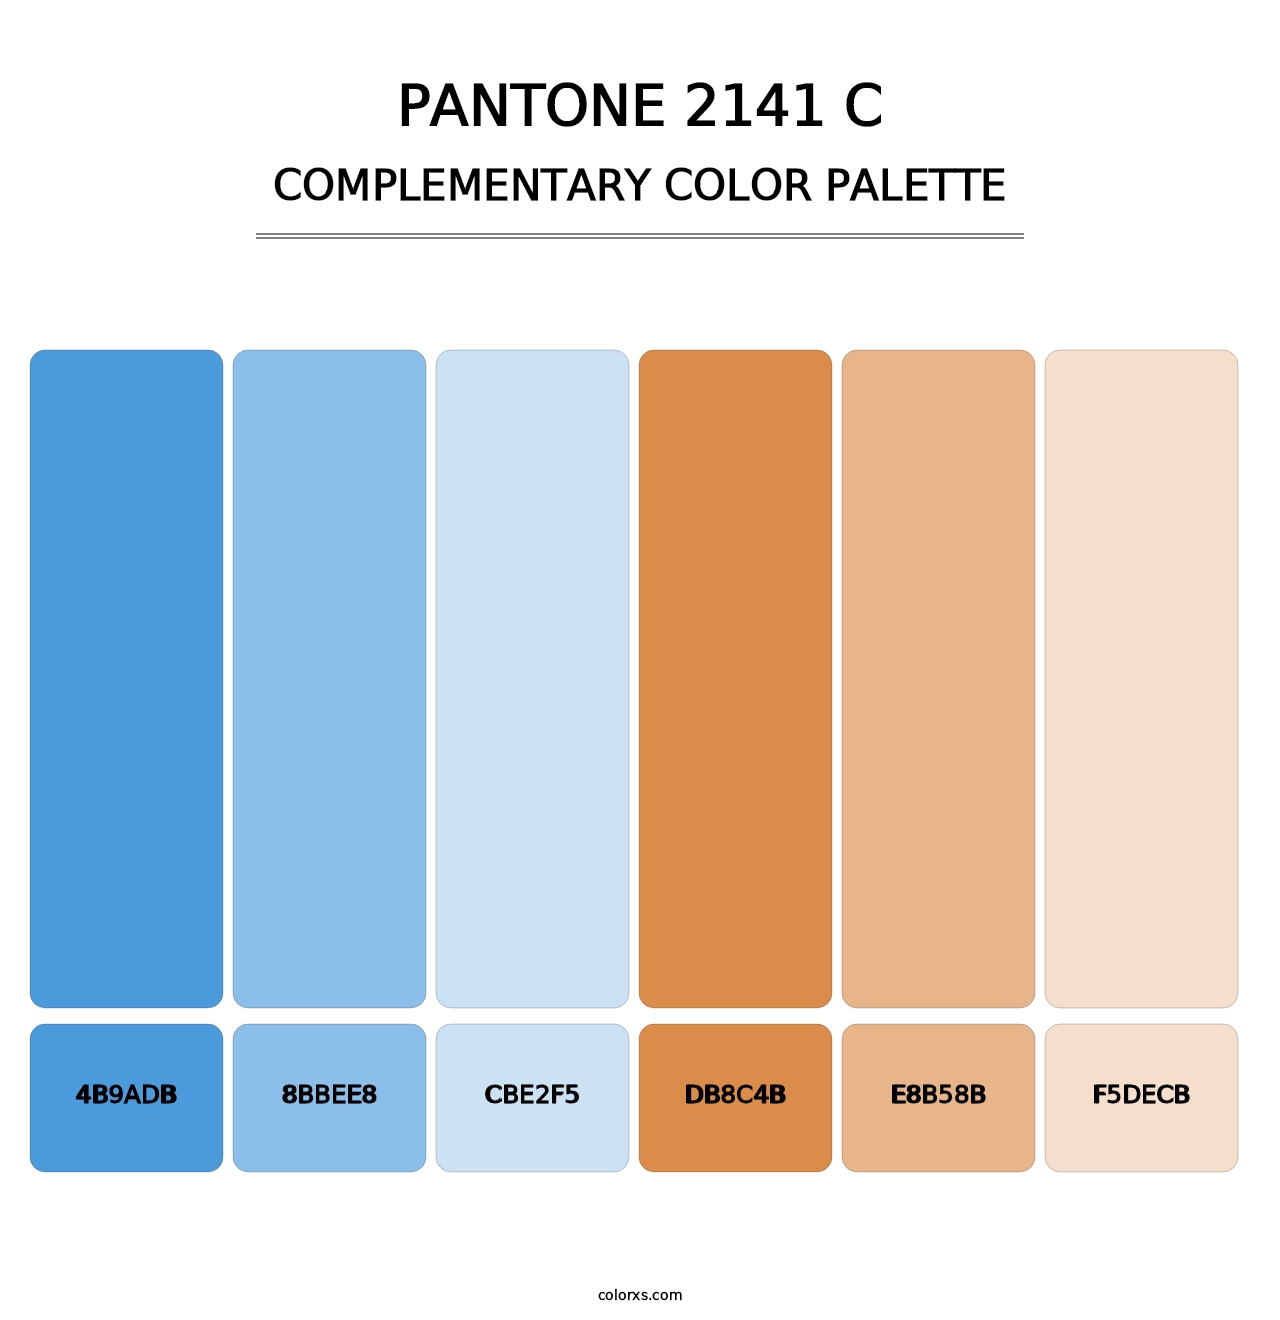 PANTONE 2141 C - Complementary Color Palette